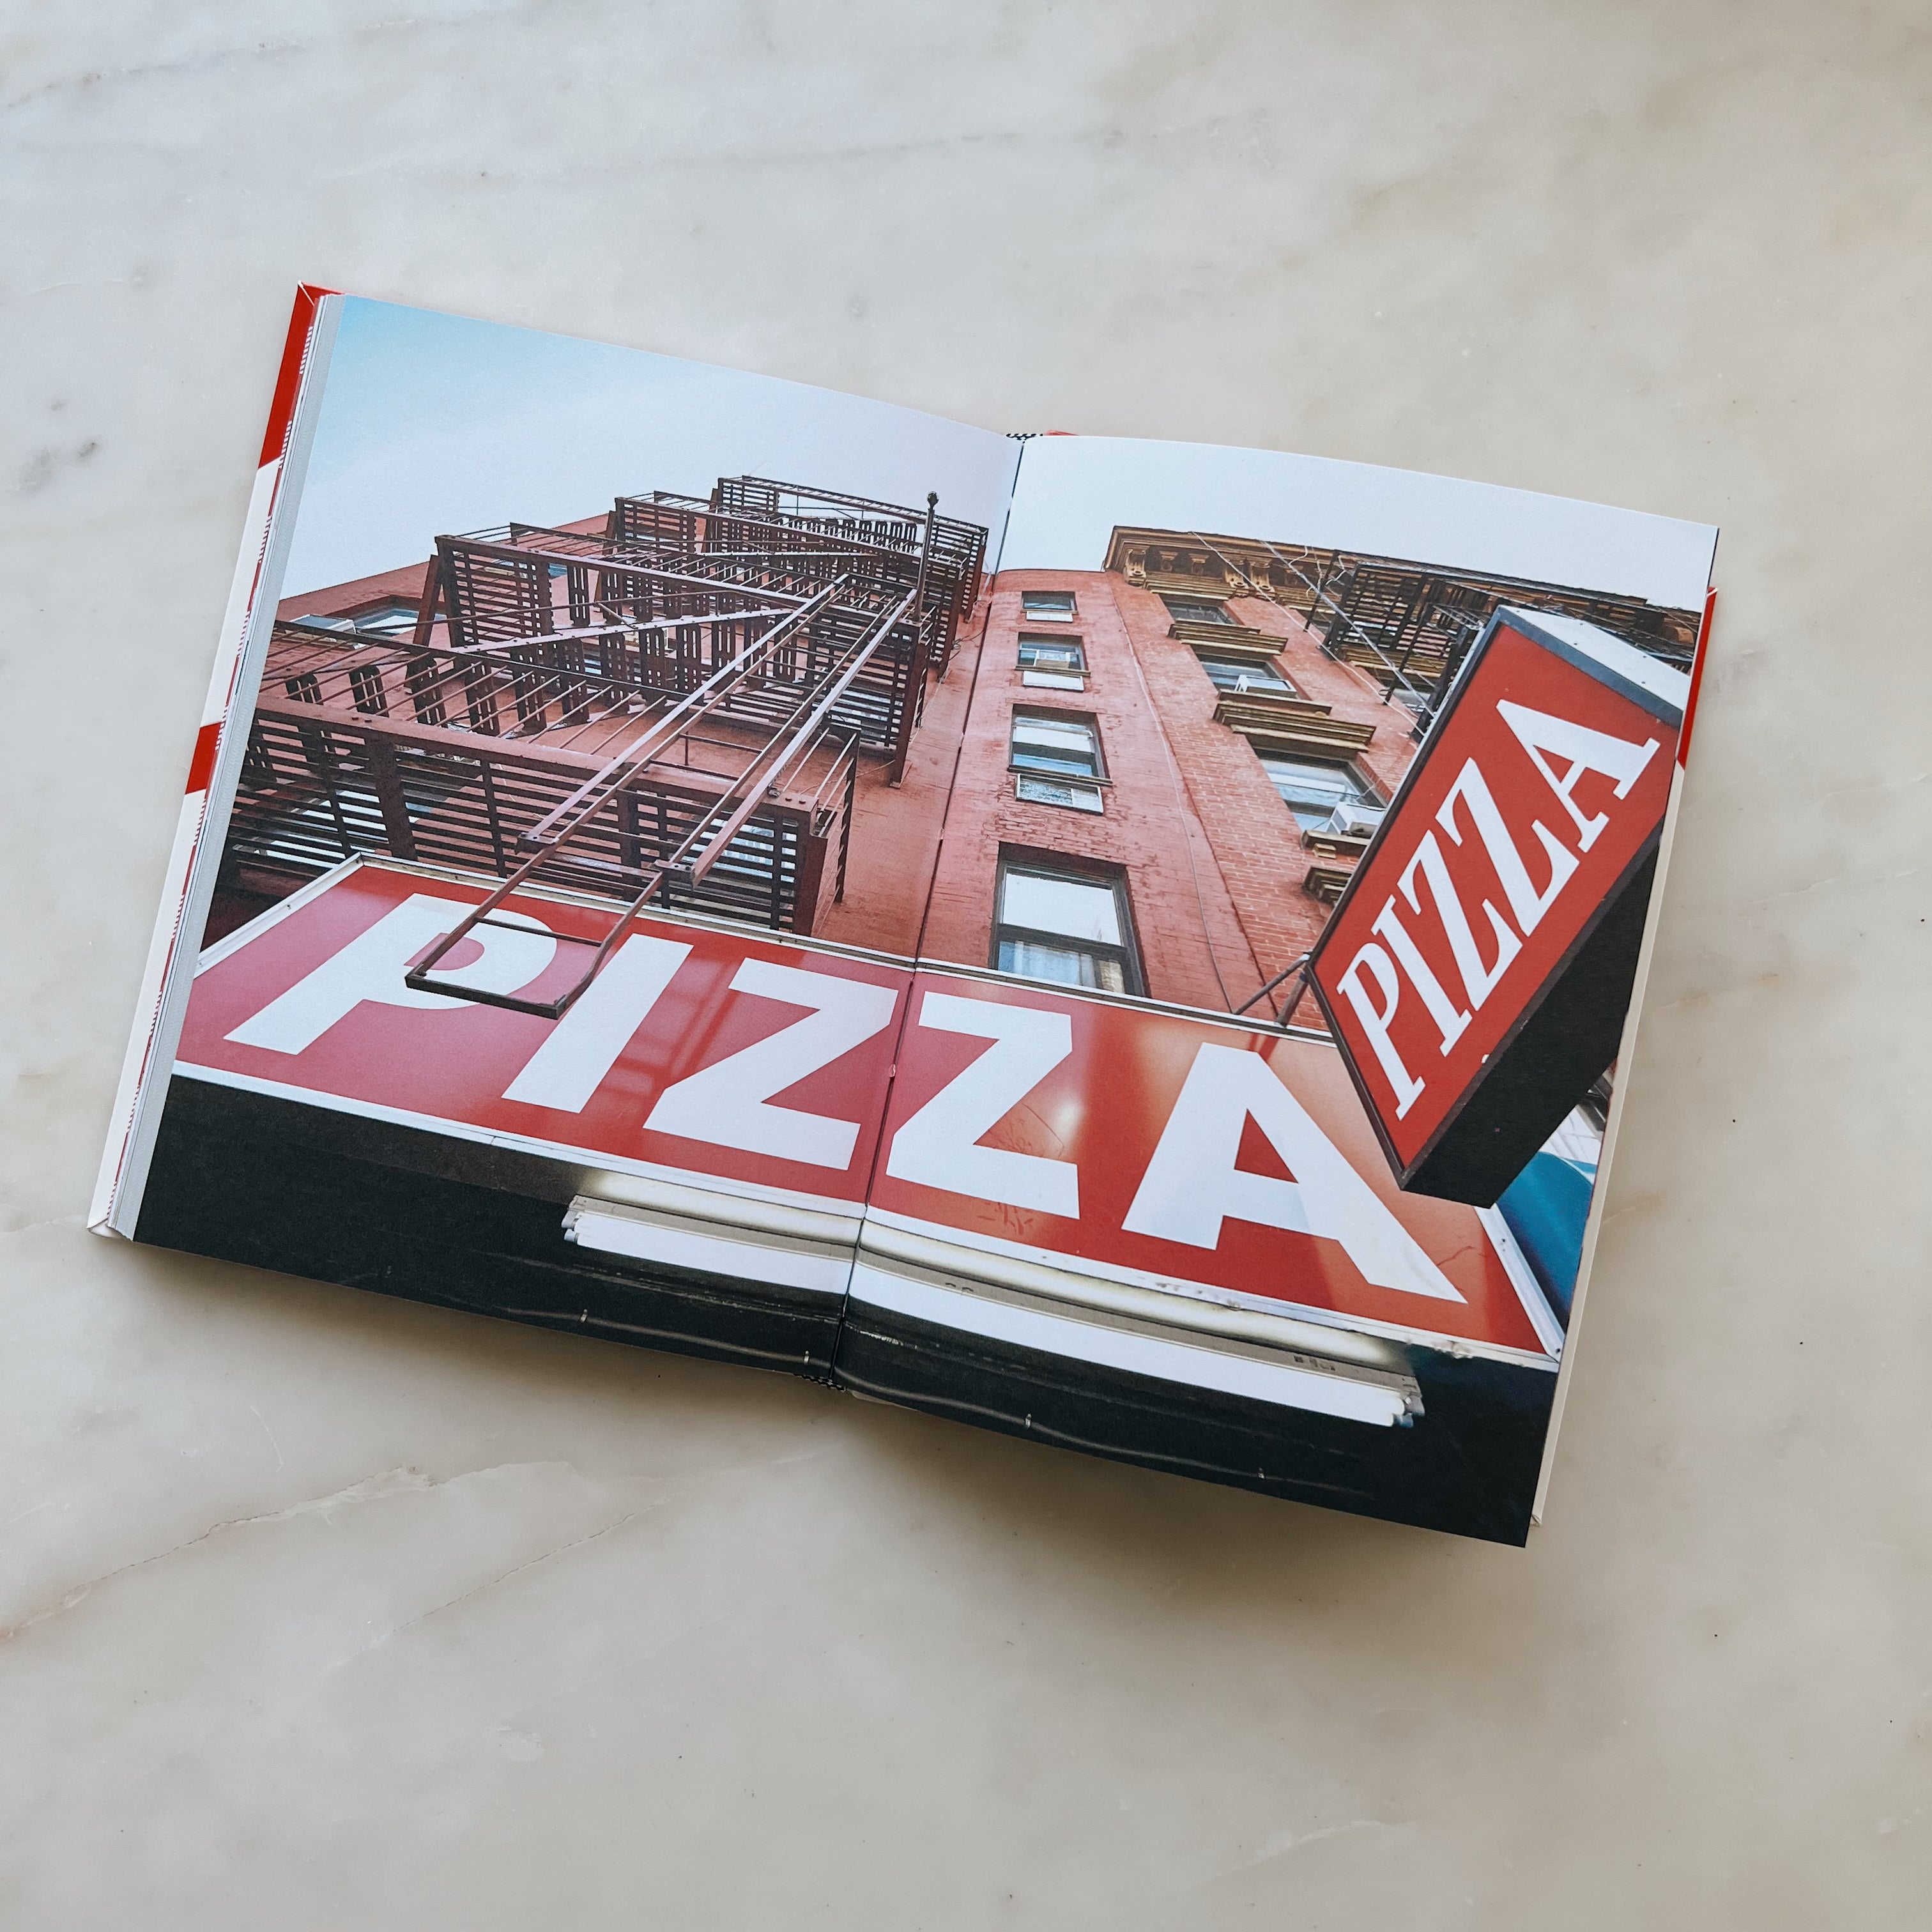 SLICE! : 30 Fabulous Pizza Recipes